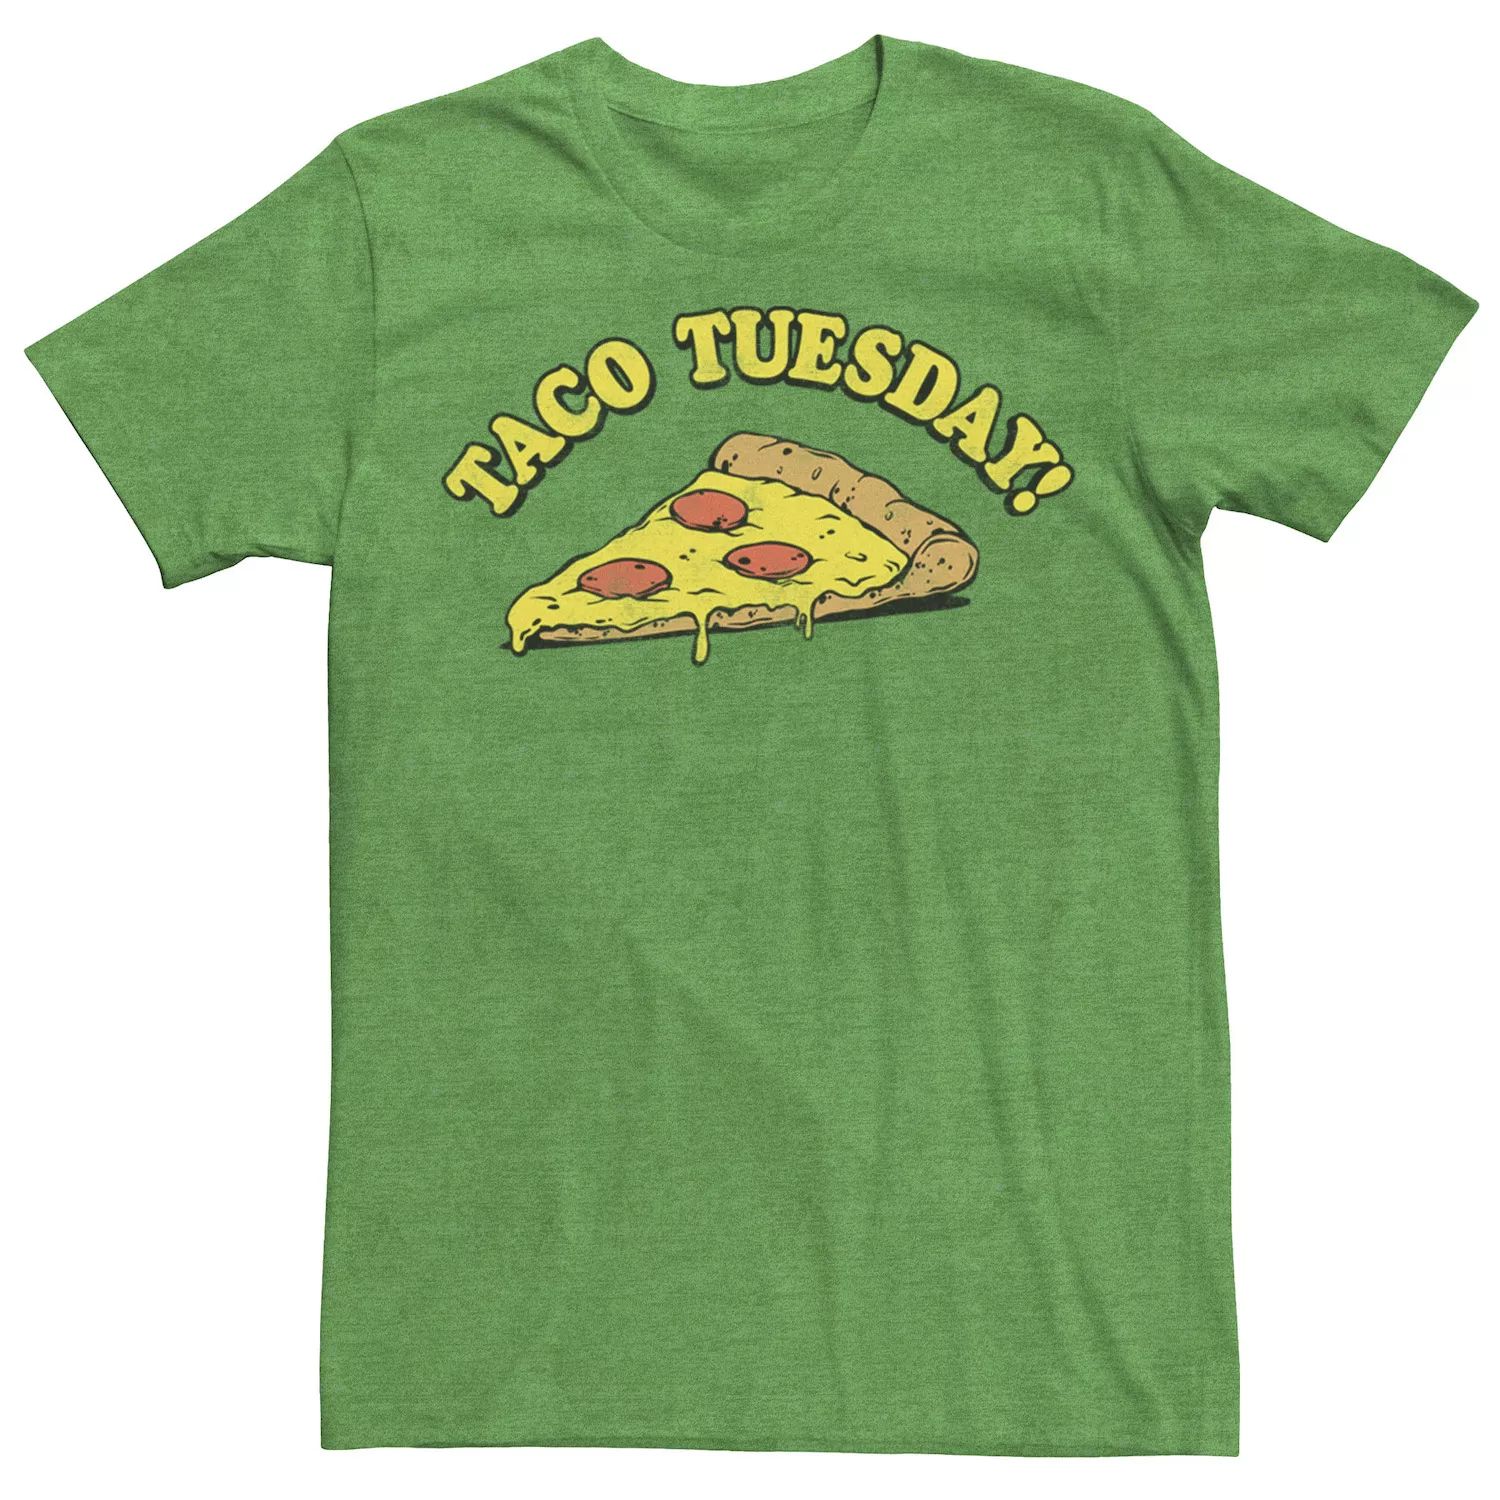 Мужская футболка Taco Tuesday с пиццей Fifth Sun